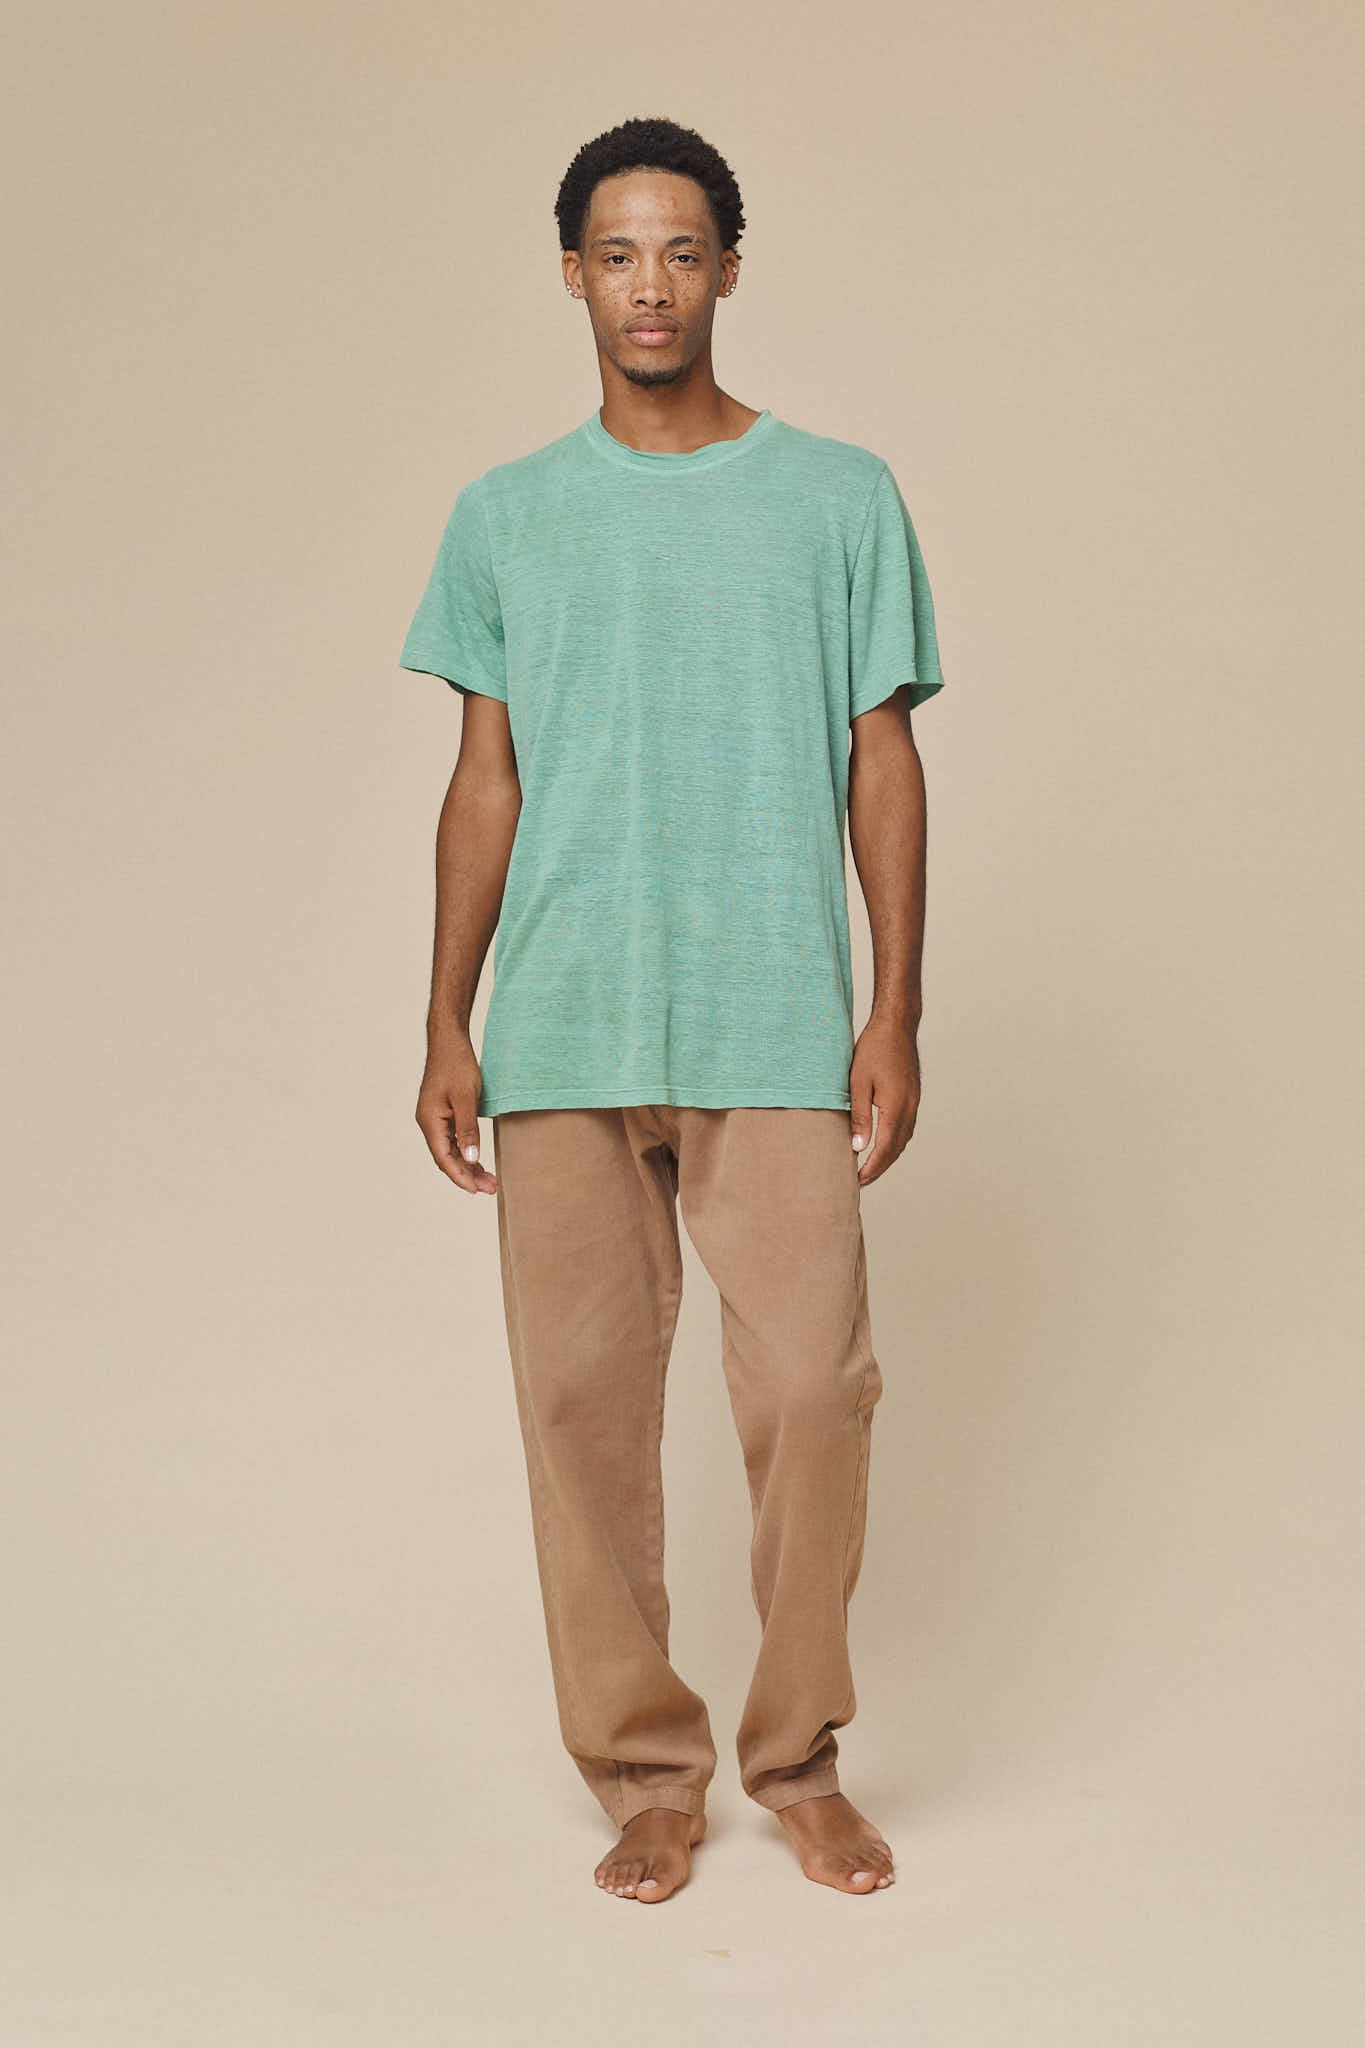 Baja Short Sleeve Pocket Hemp Tee | Jungmaven Hemp Clothing DIESEL Gray / L